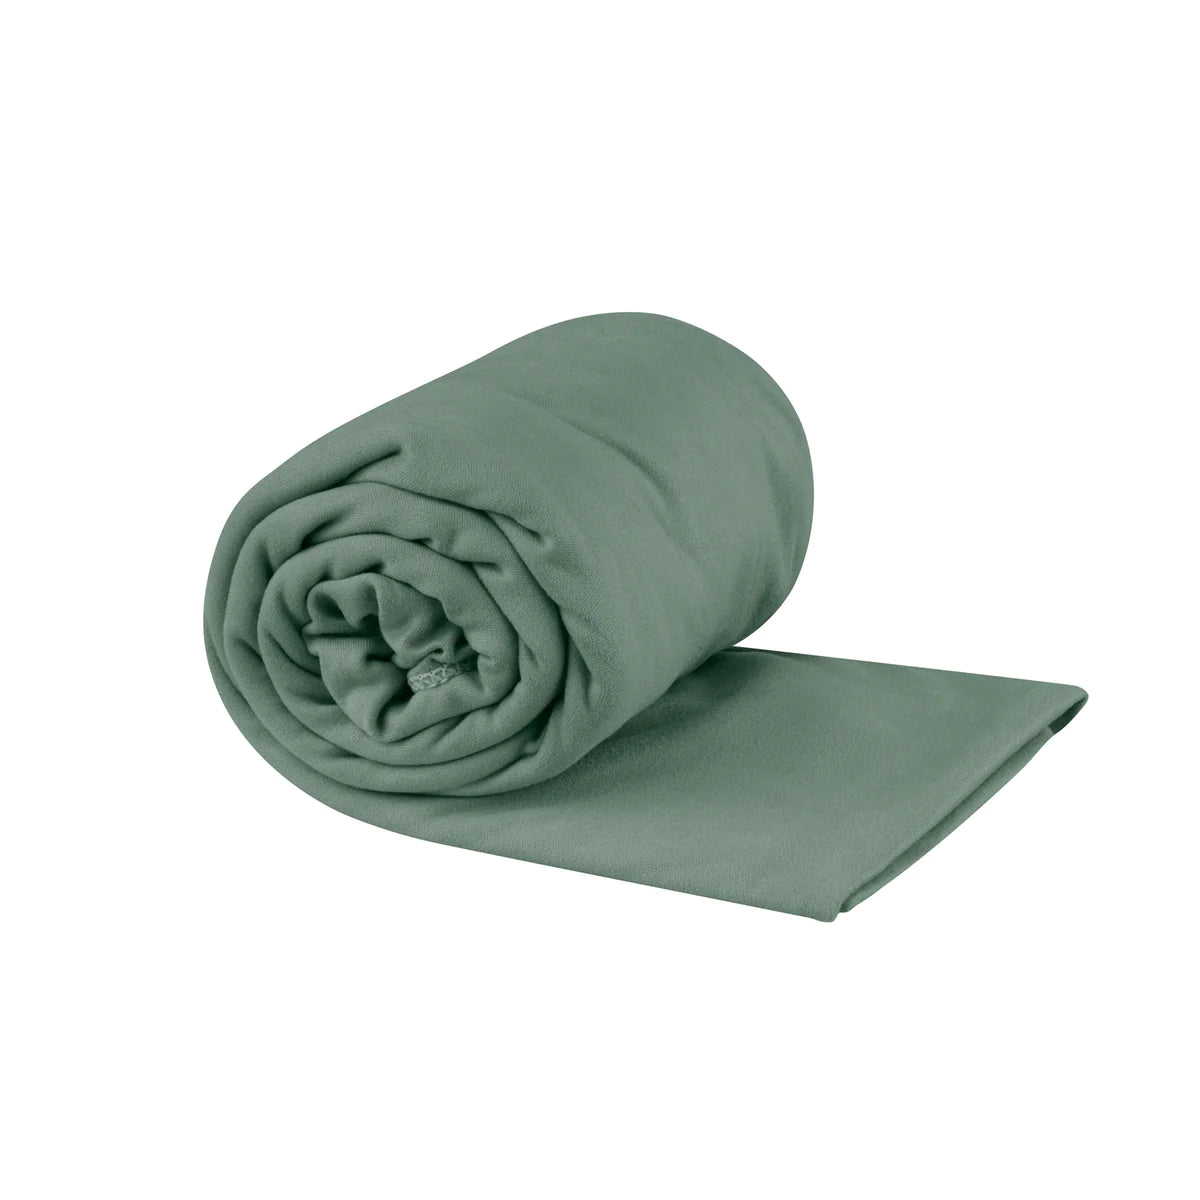 Sea to Summit - Pocket Towel X-Large - Sage Green-1